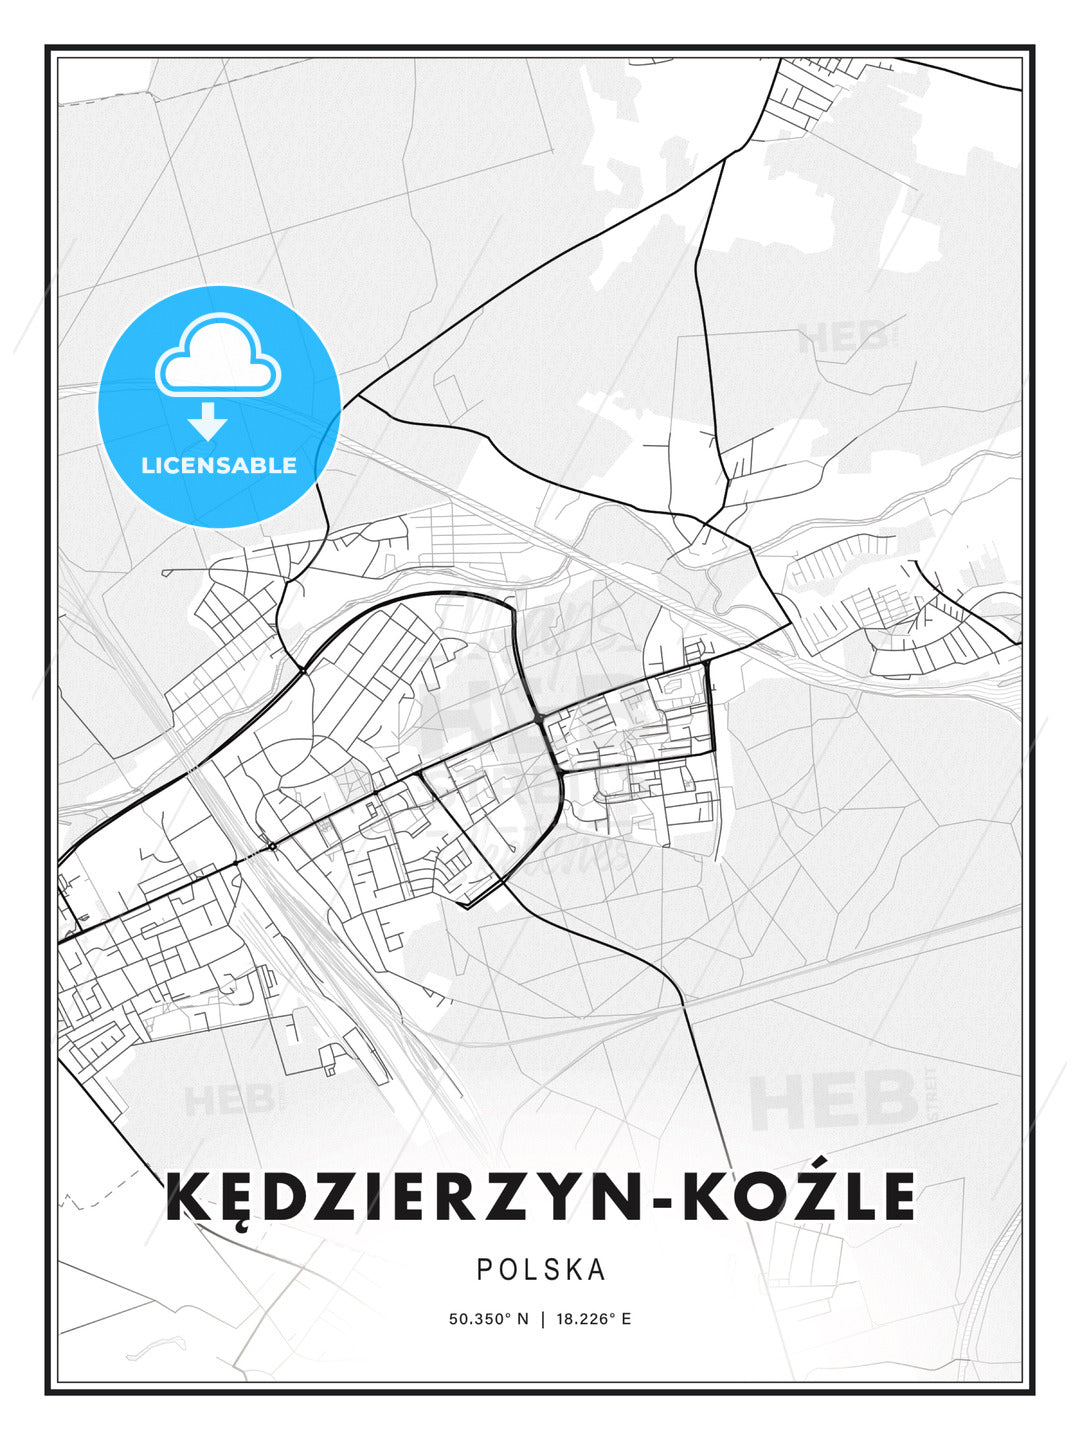 Kędzierzyn-Koźle, Poland, Modern Print Template in Various Formats - HEBSTREITS Sketches